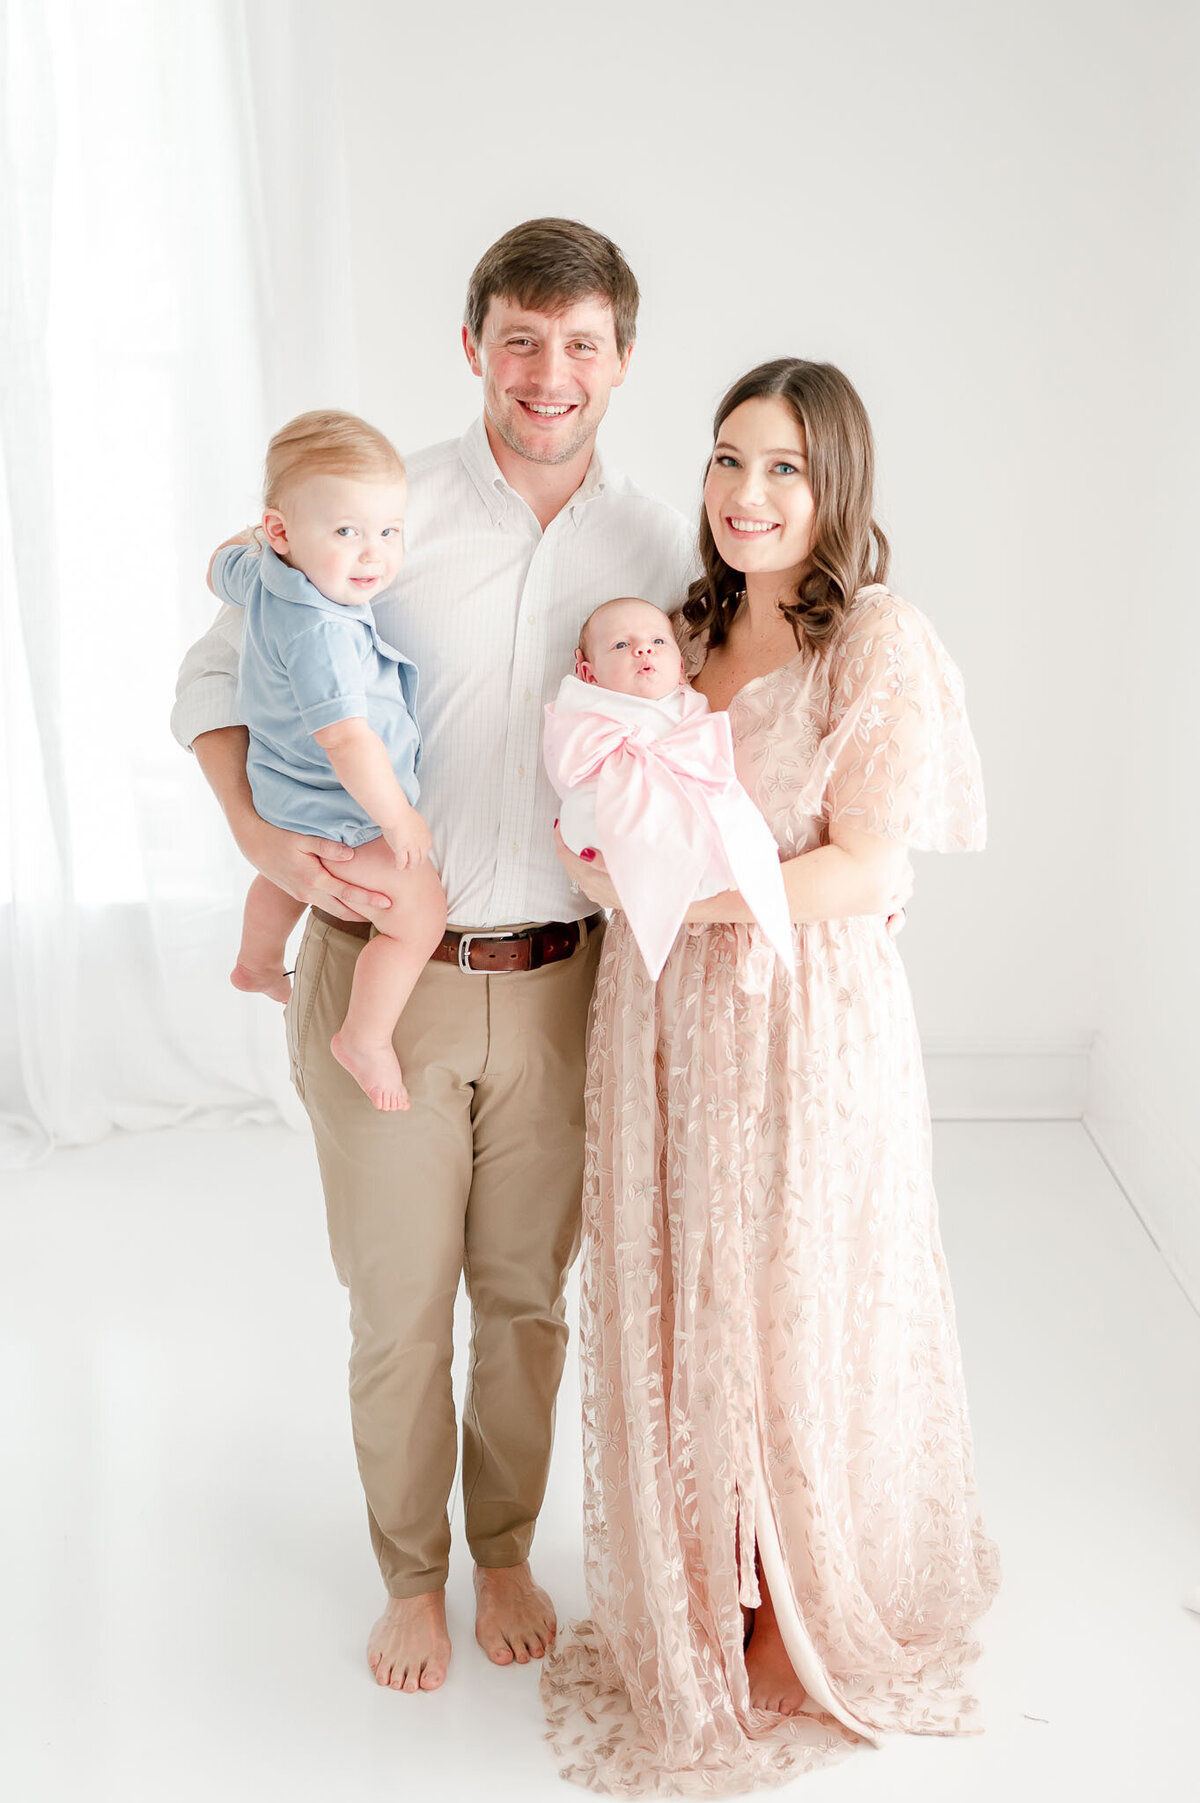 Family of 4 with a newborn smiles in Nashville newborn photographer Kristie Lloyd's studio